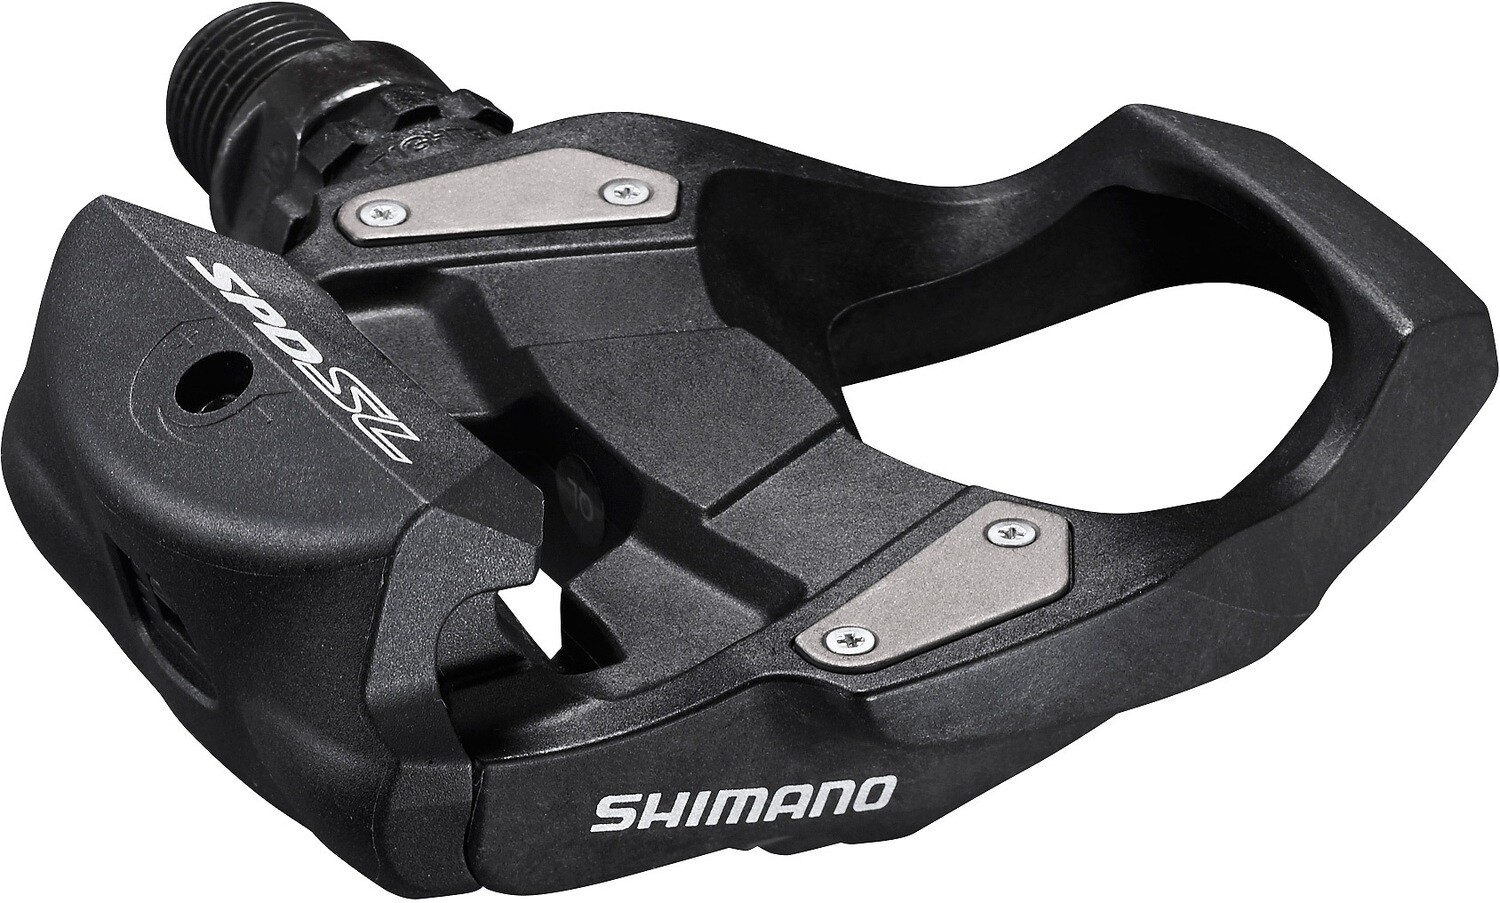 Shimano RD500 Road SPD-SL Pedals